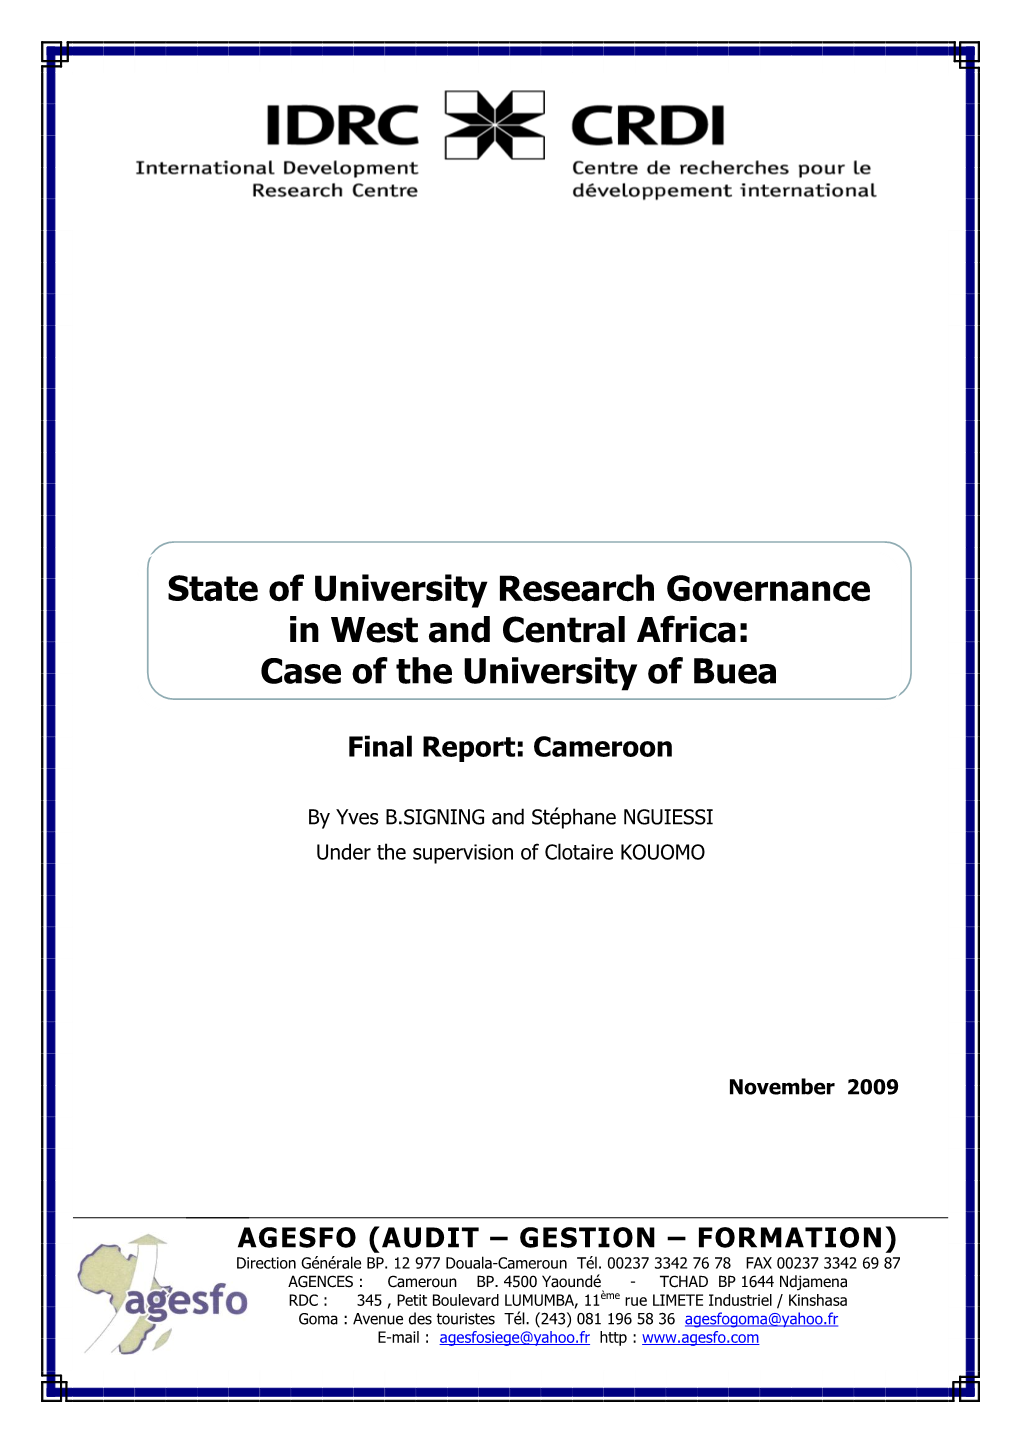 Case of the University of Buea